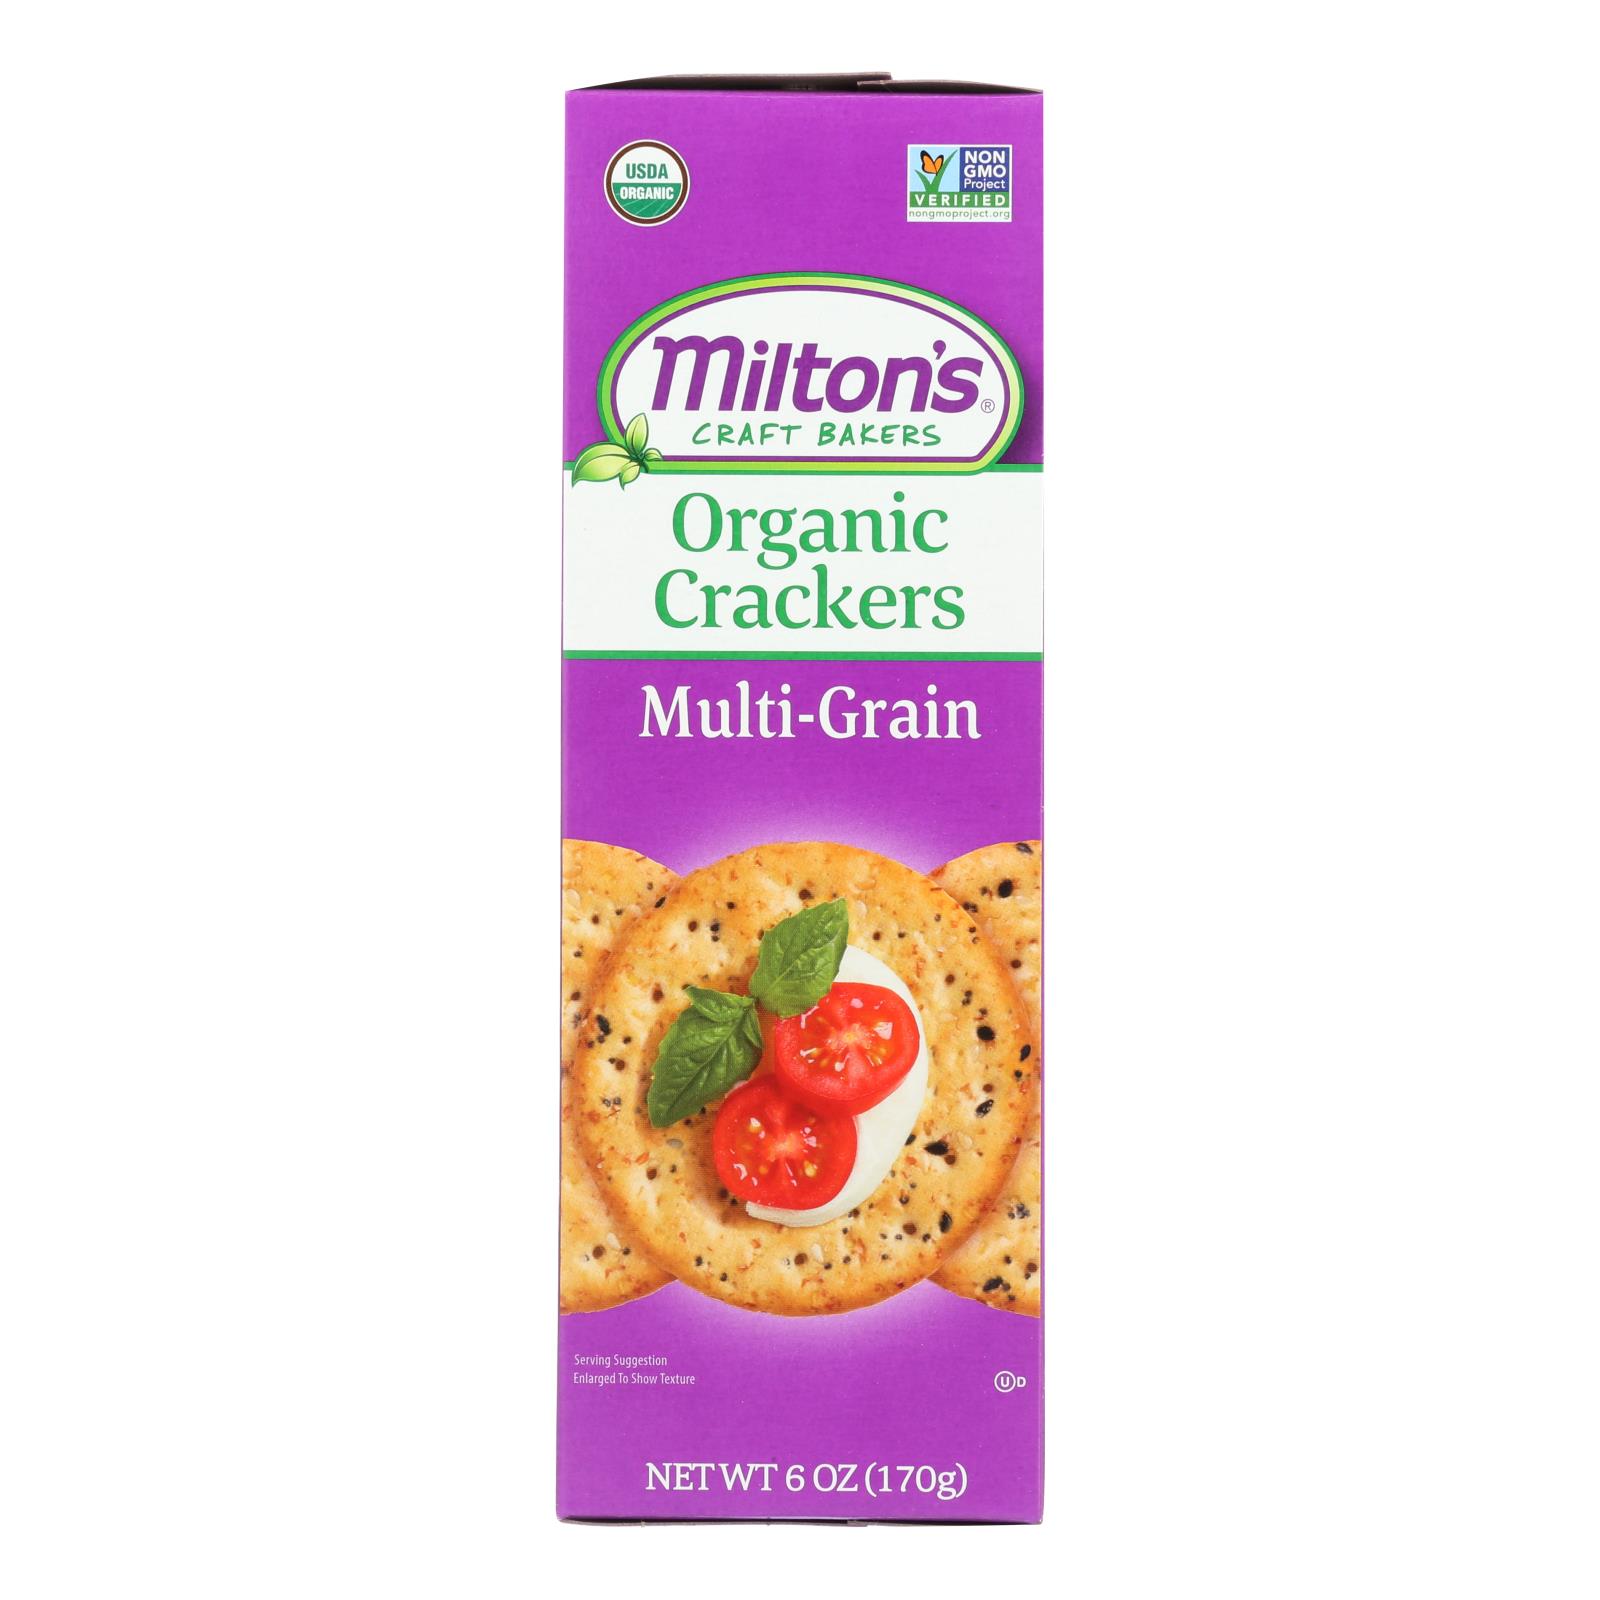 Miltons - Baked Crackers Mltgrn - 8개 묶음상품 - 6 OZ